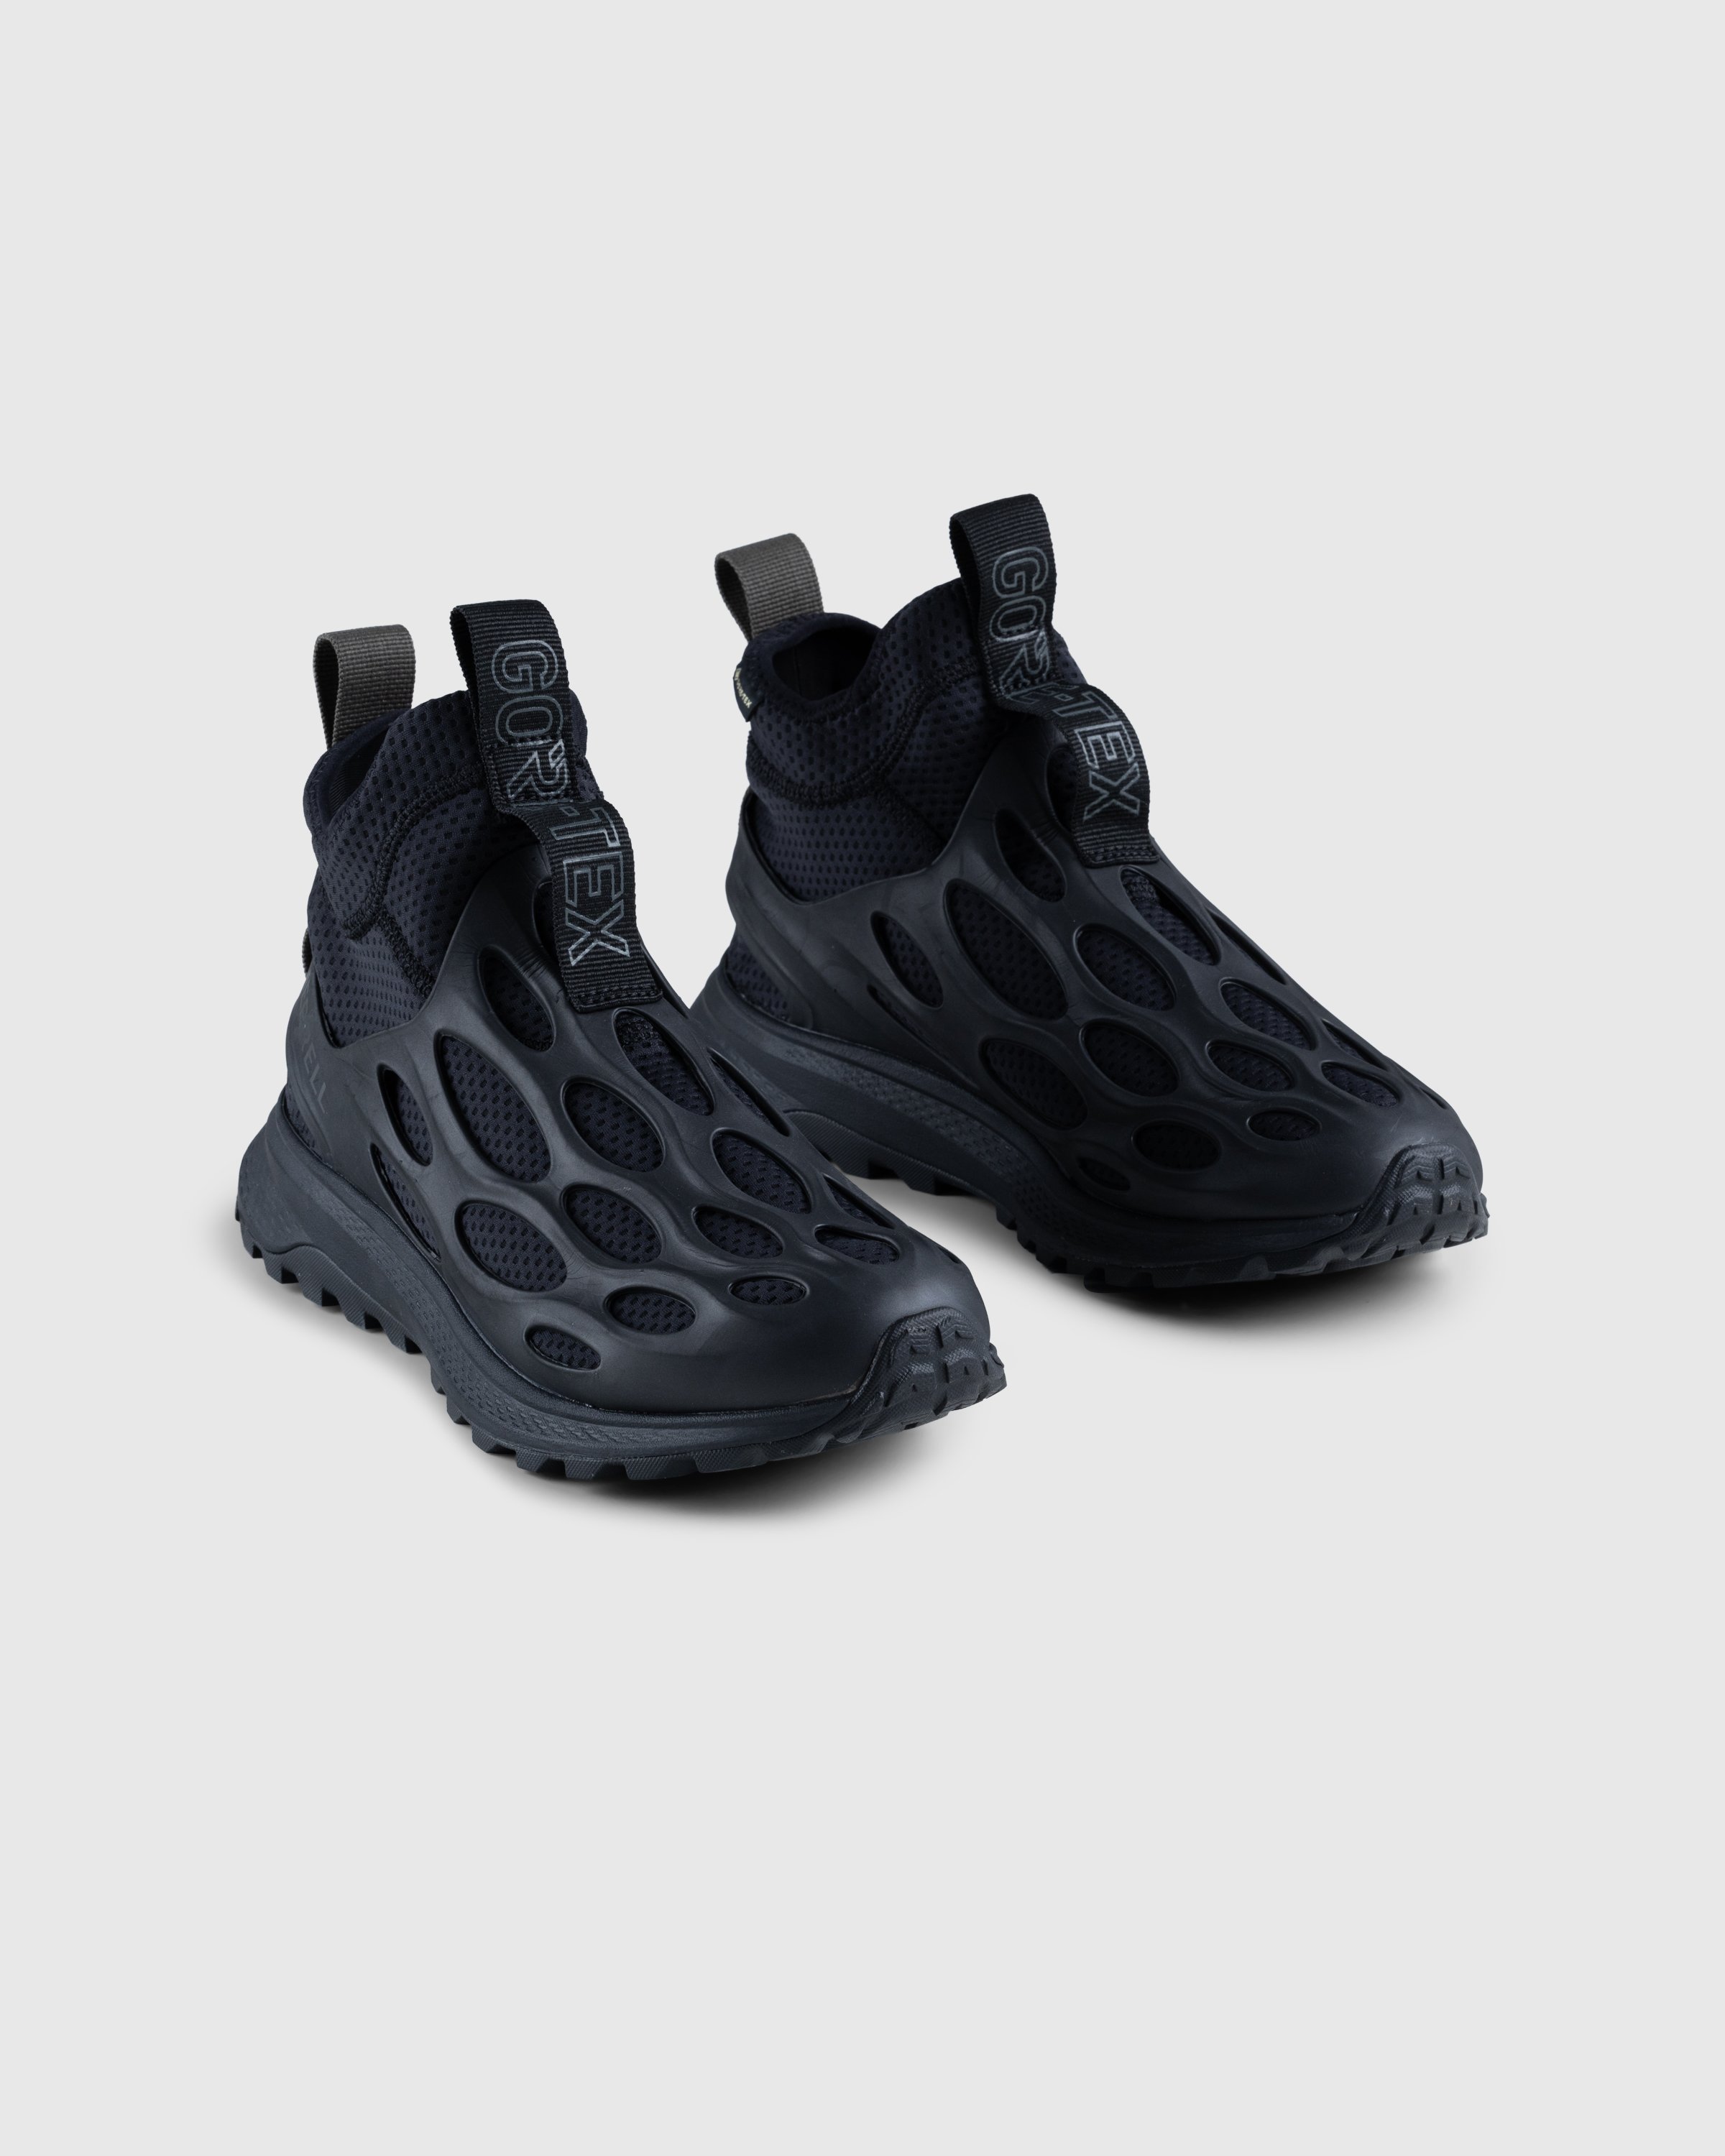 Merrell - Hydro Runner Mid GORE-TEX Black - Footwear - Black - Image 3